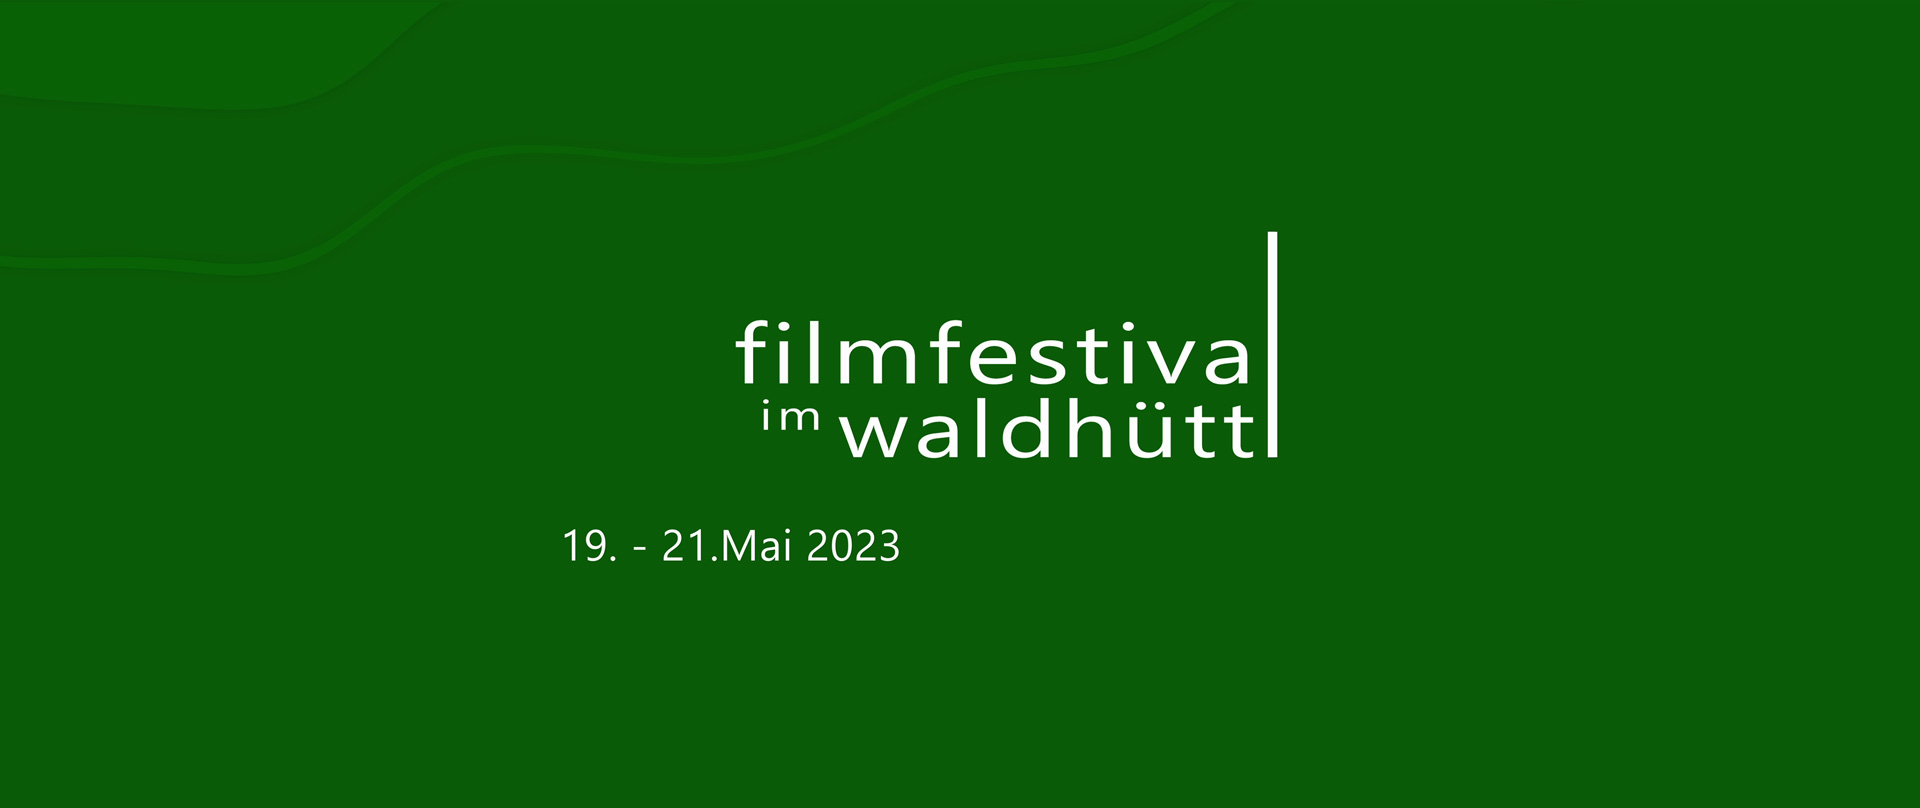 filmfestival im waldhüttl, tag 1, 19.-21.5.2023